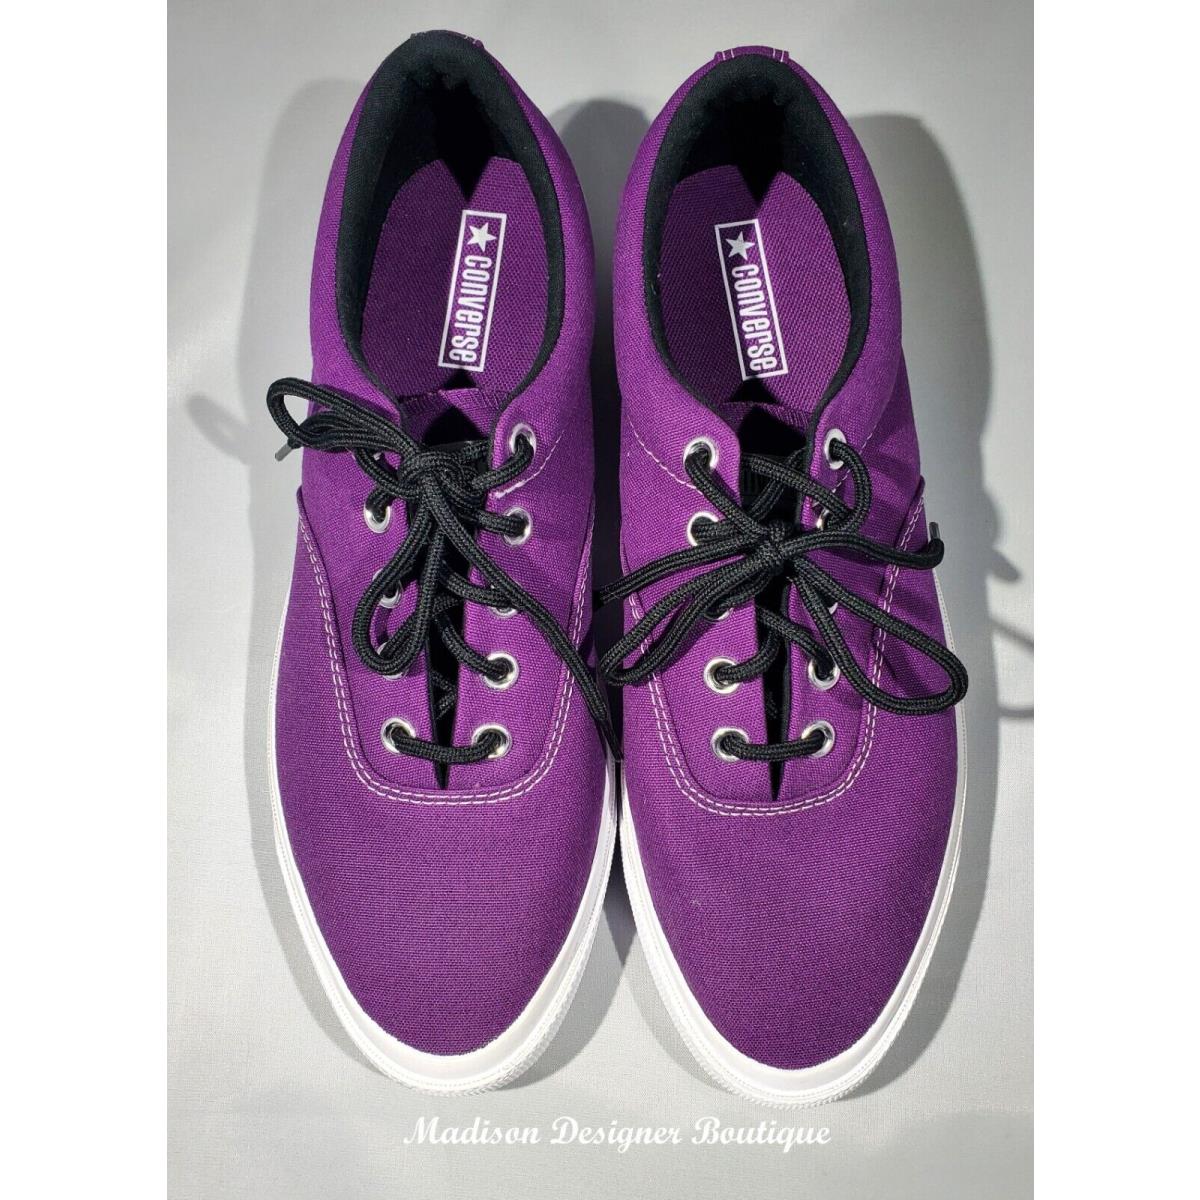 Converse Skid Grip Cvo OX Shoes in Nightfall Violet Purple 10.5